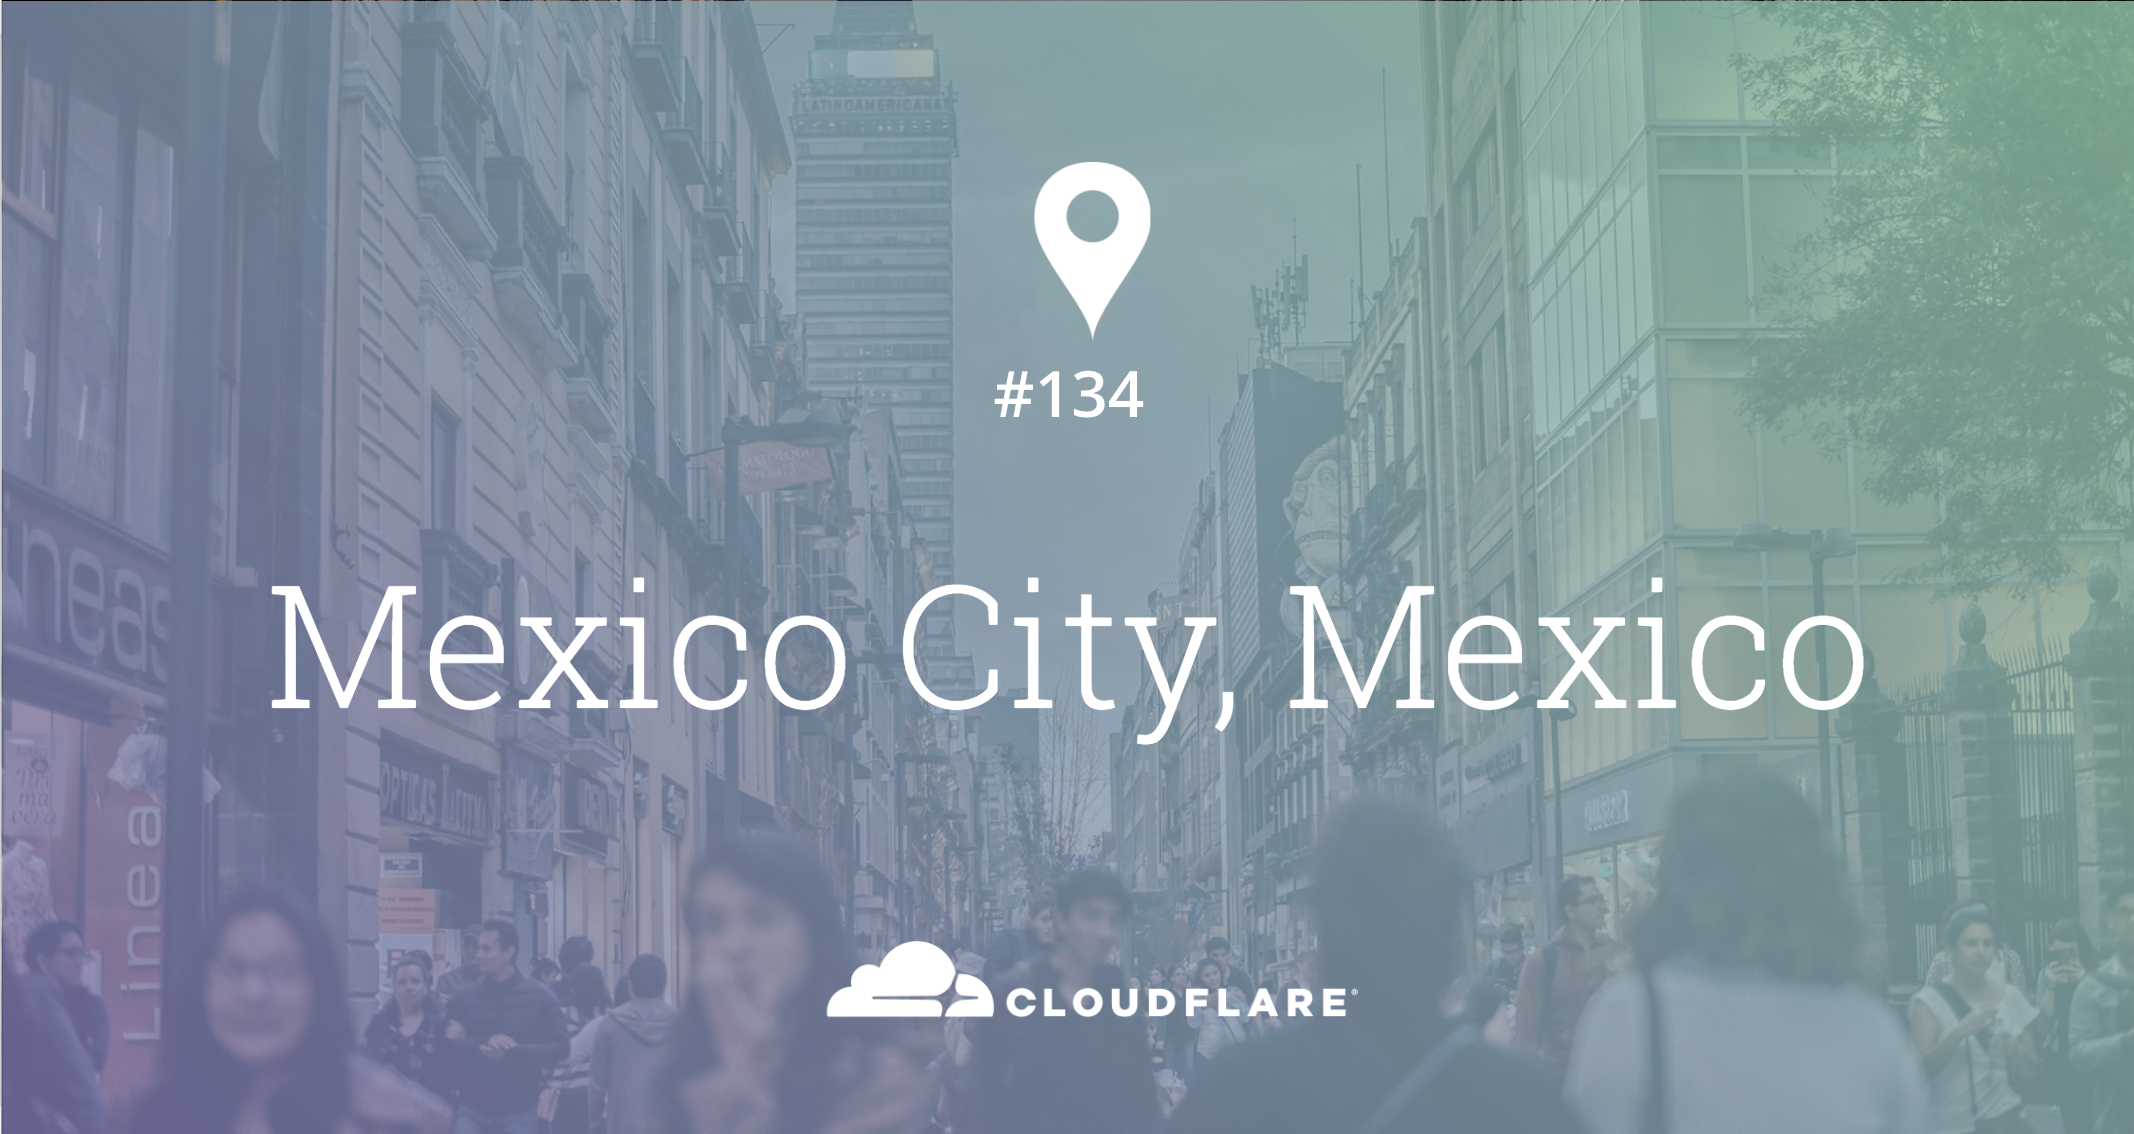 Mexico City, Mexico: Cloudflare Data Center #134